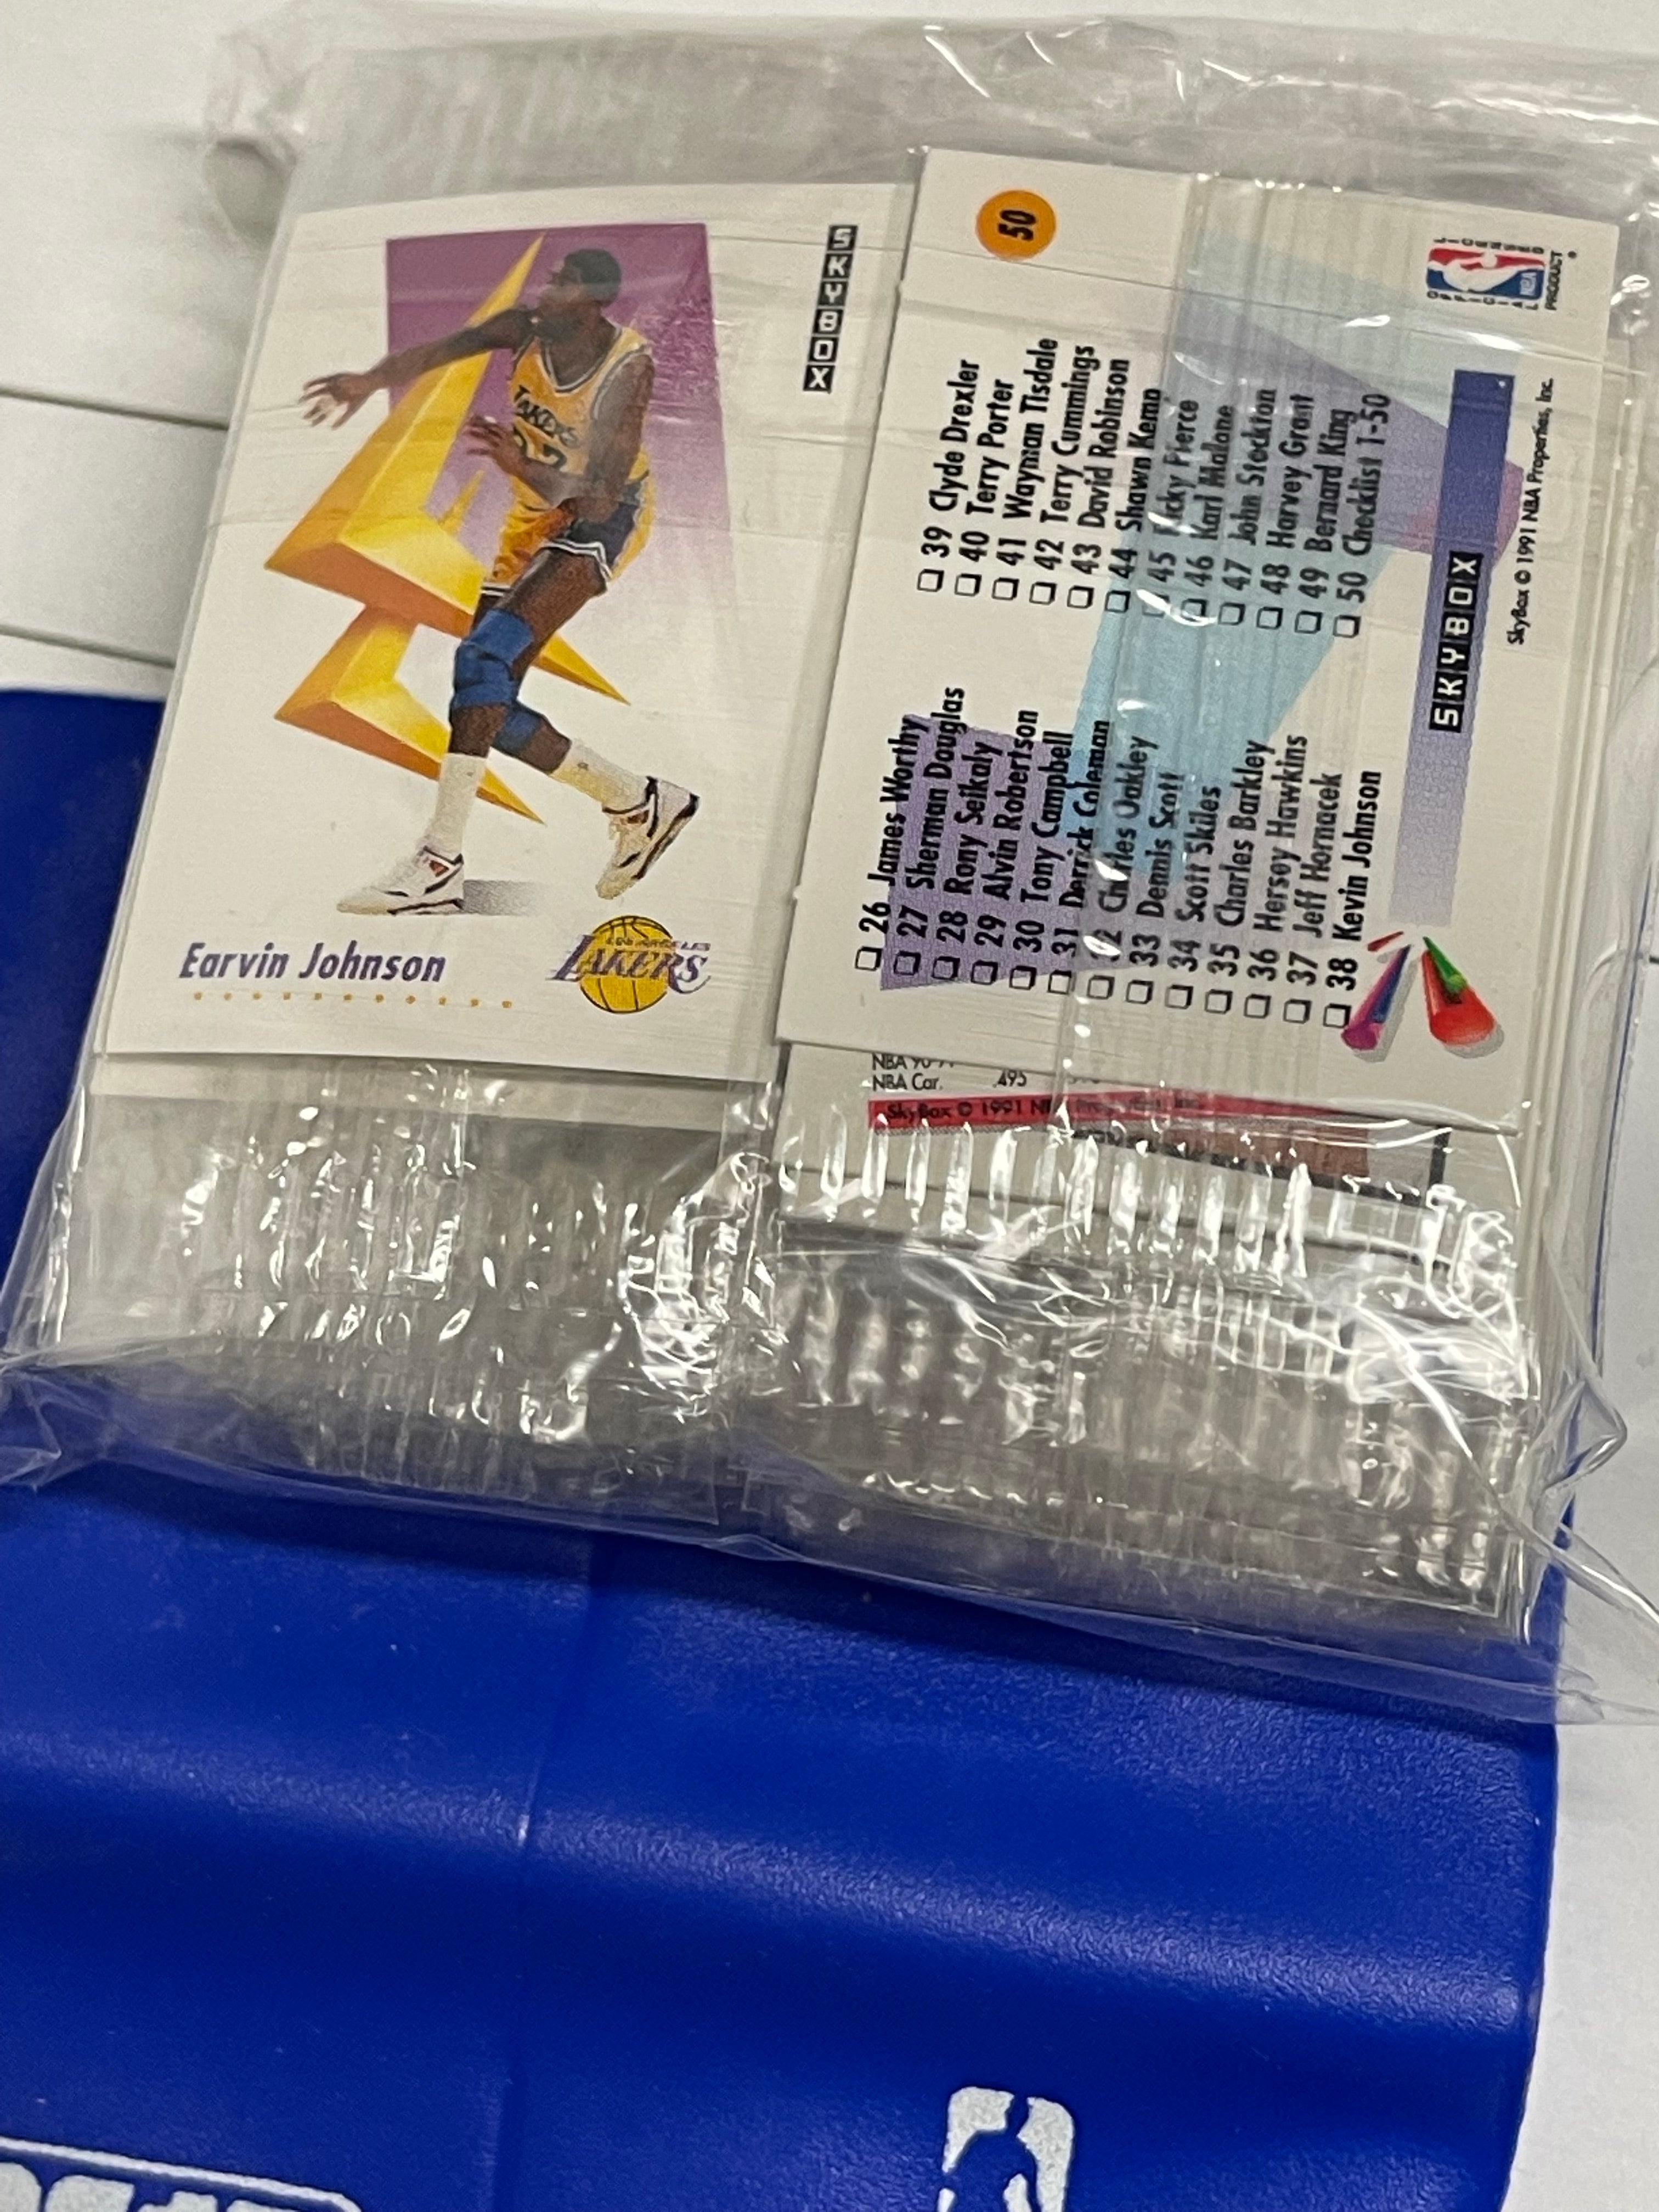 NBA Skybox Basketball Hostess Chips rare mini-cards set with rare pouch 1992